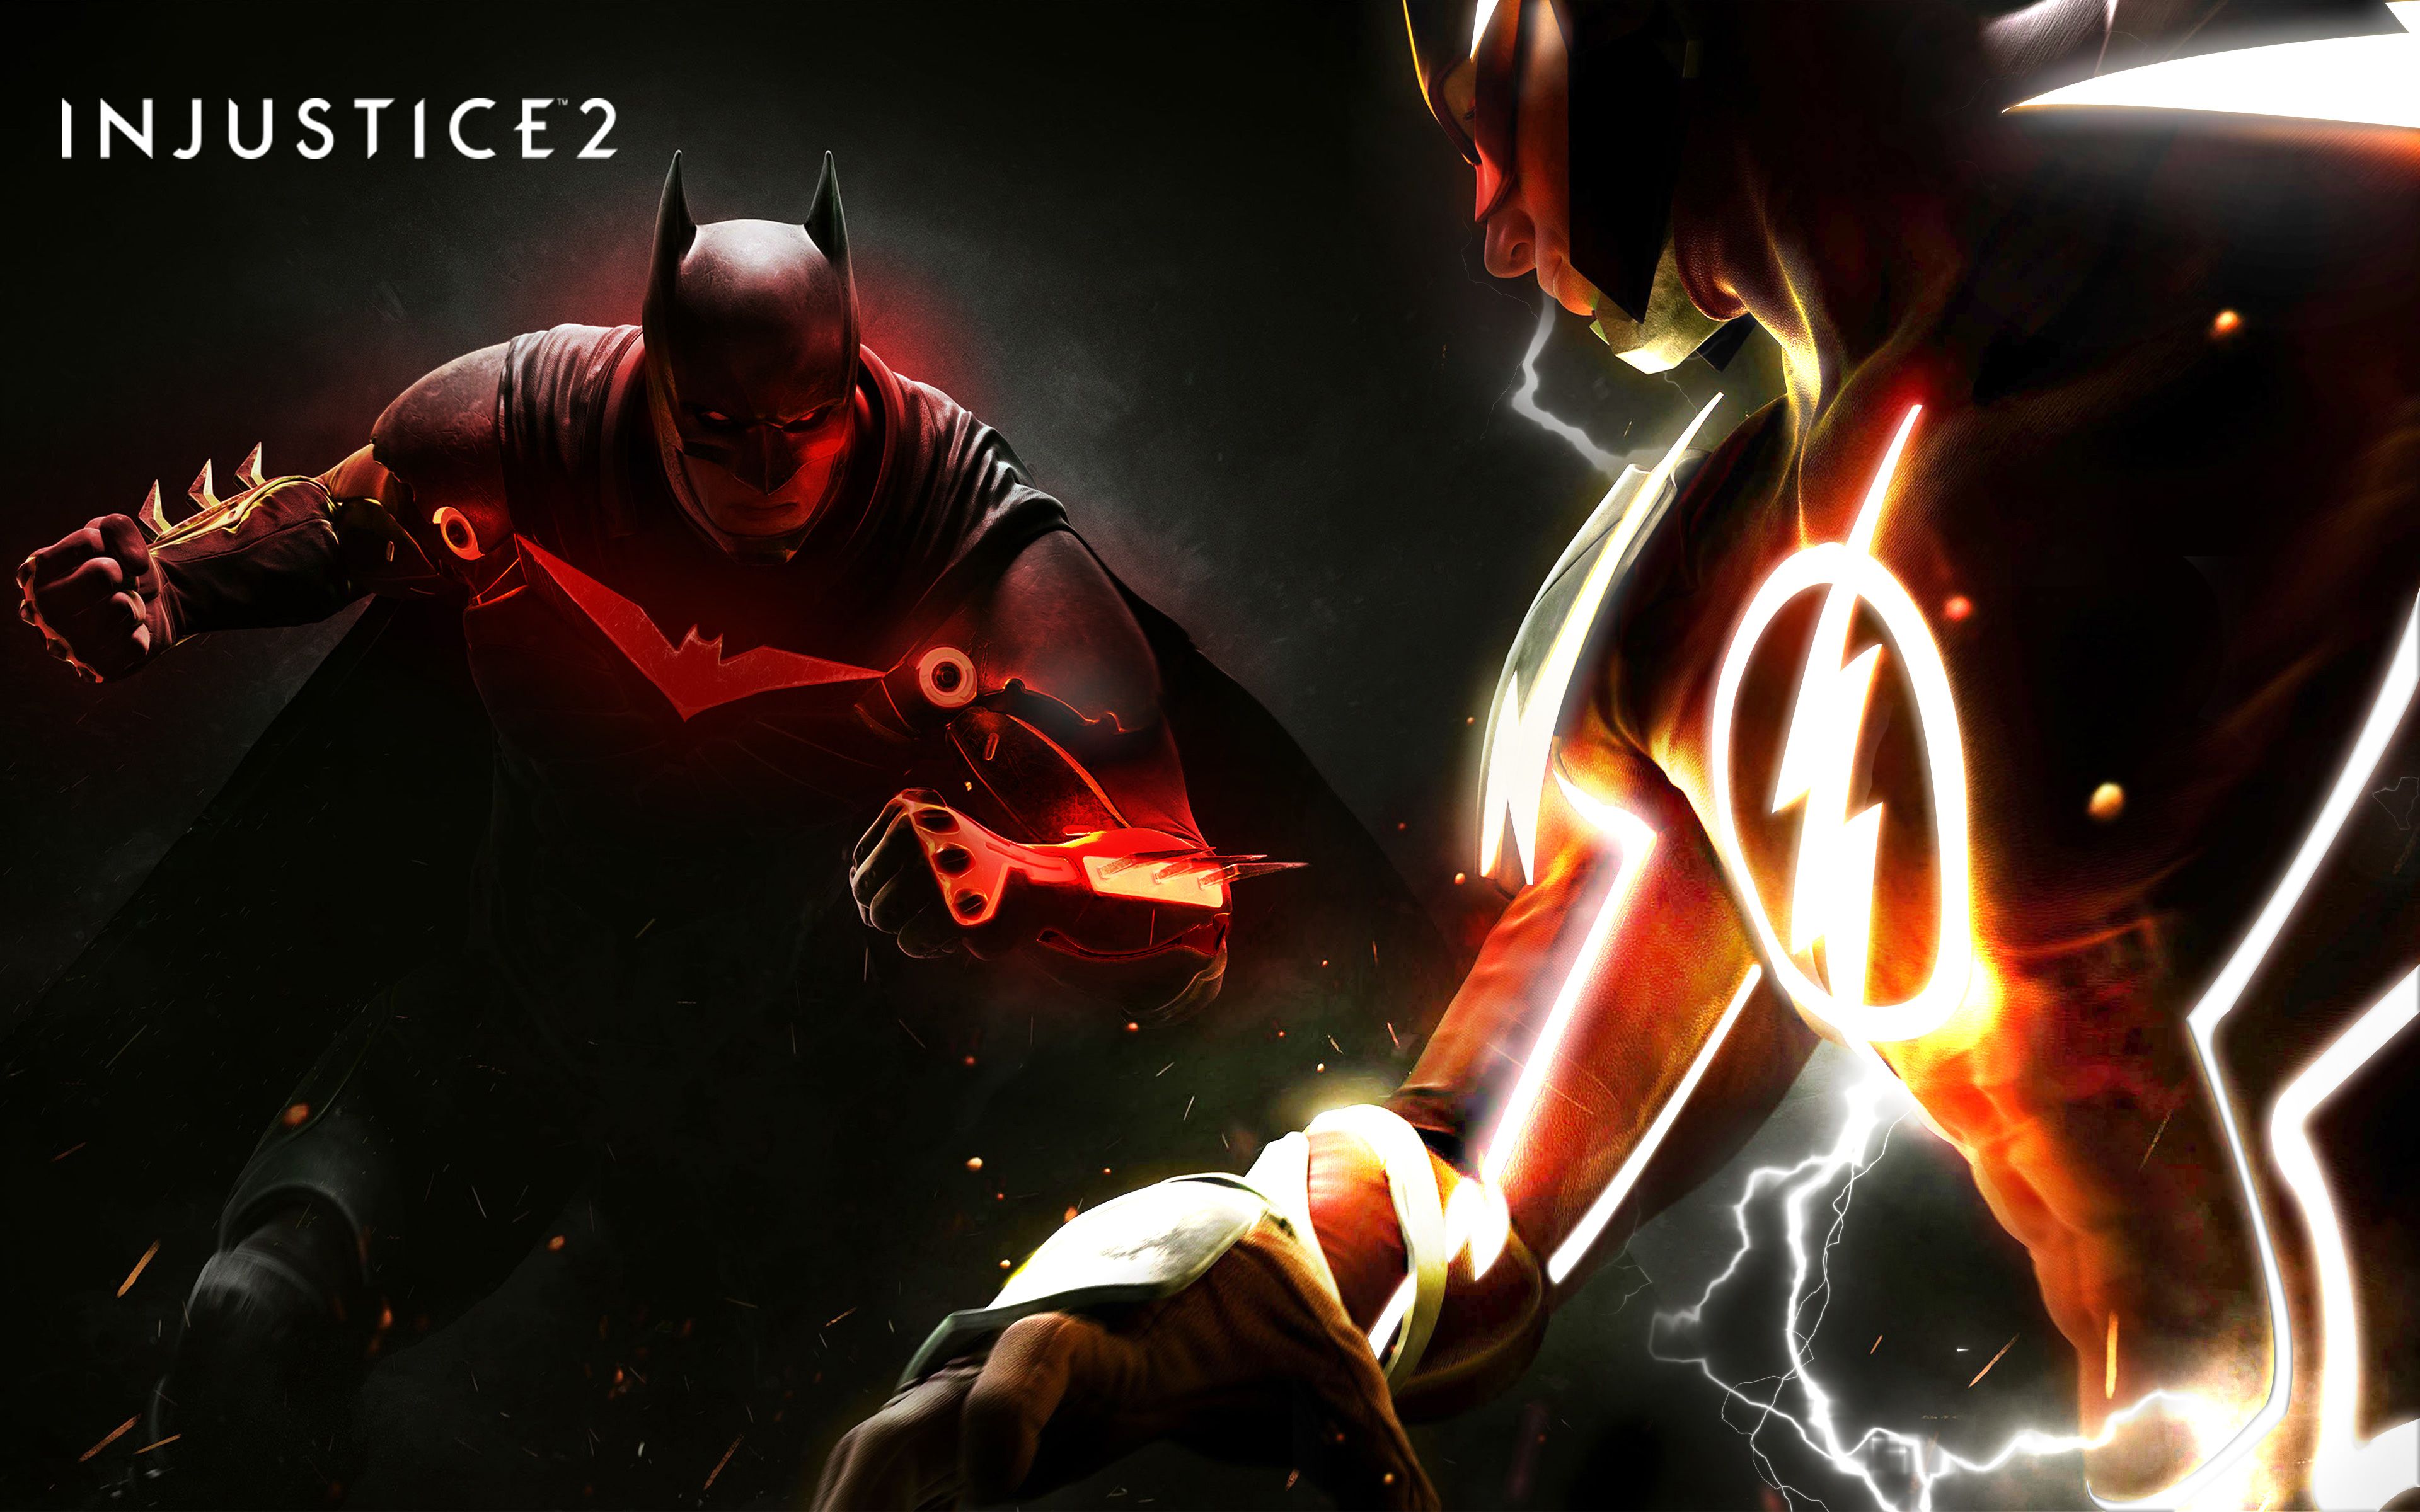 Injustice 2 Fanart Poster Batman Vs Flash 4k, HD Games, 4k Wallpaper, Image, Background, Photo and Picture